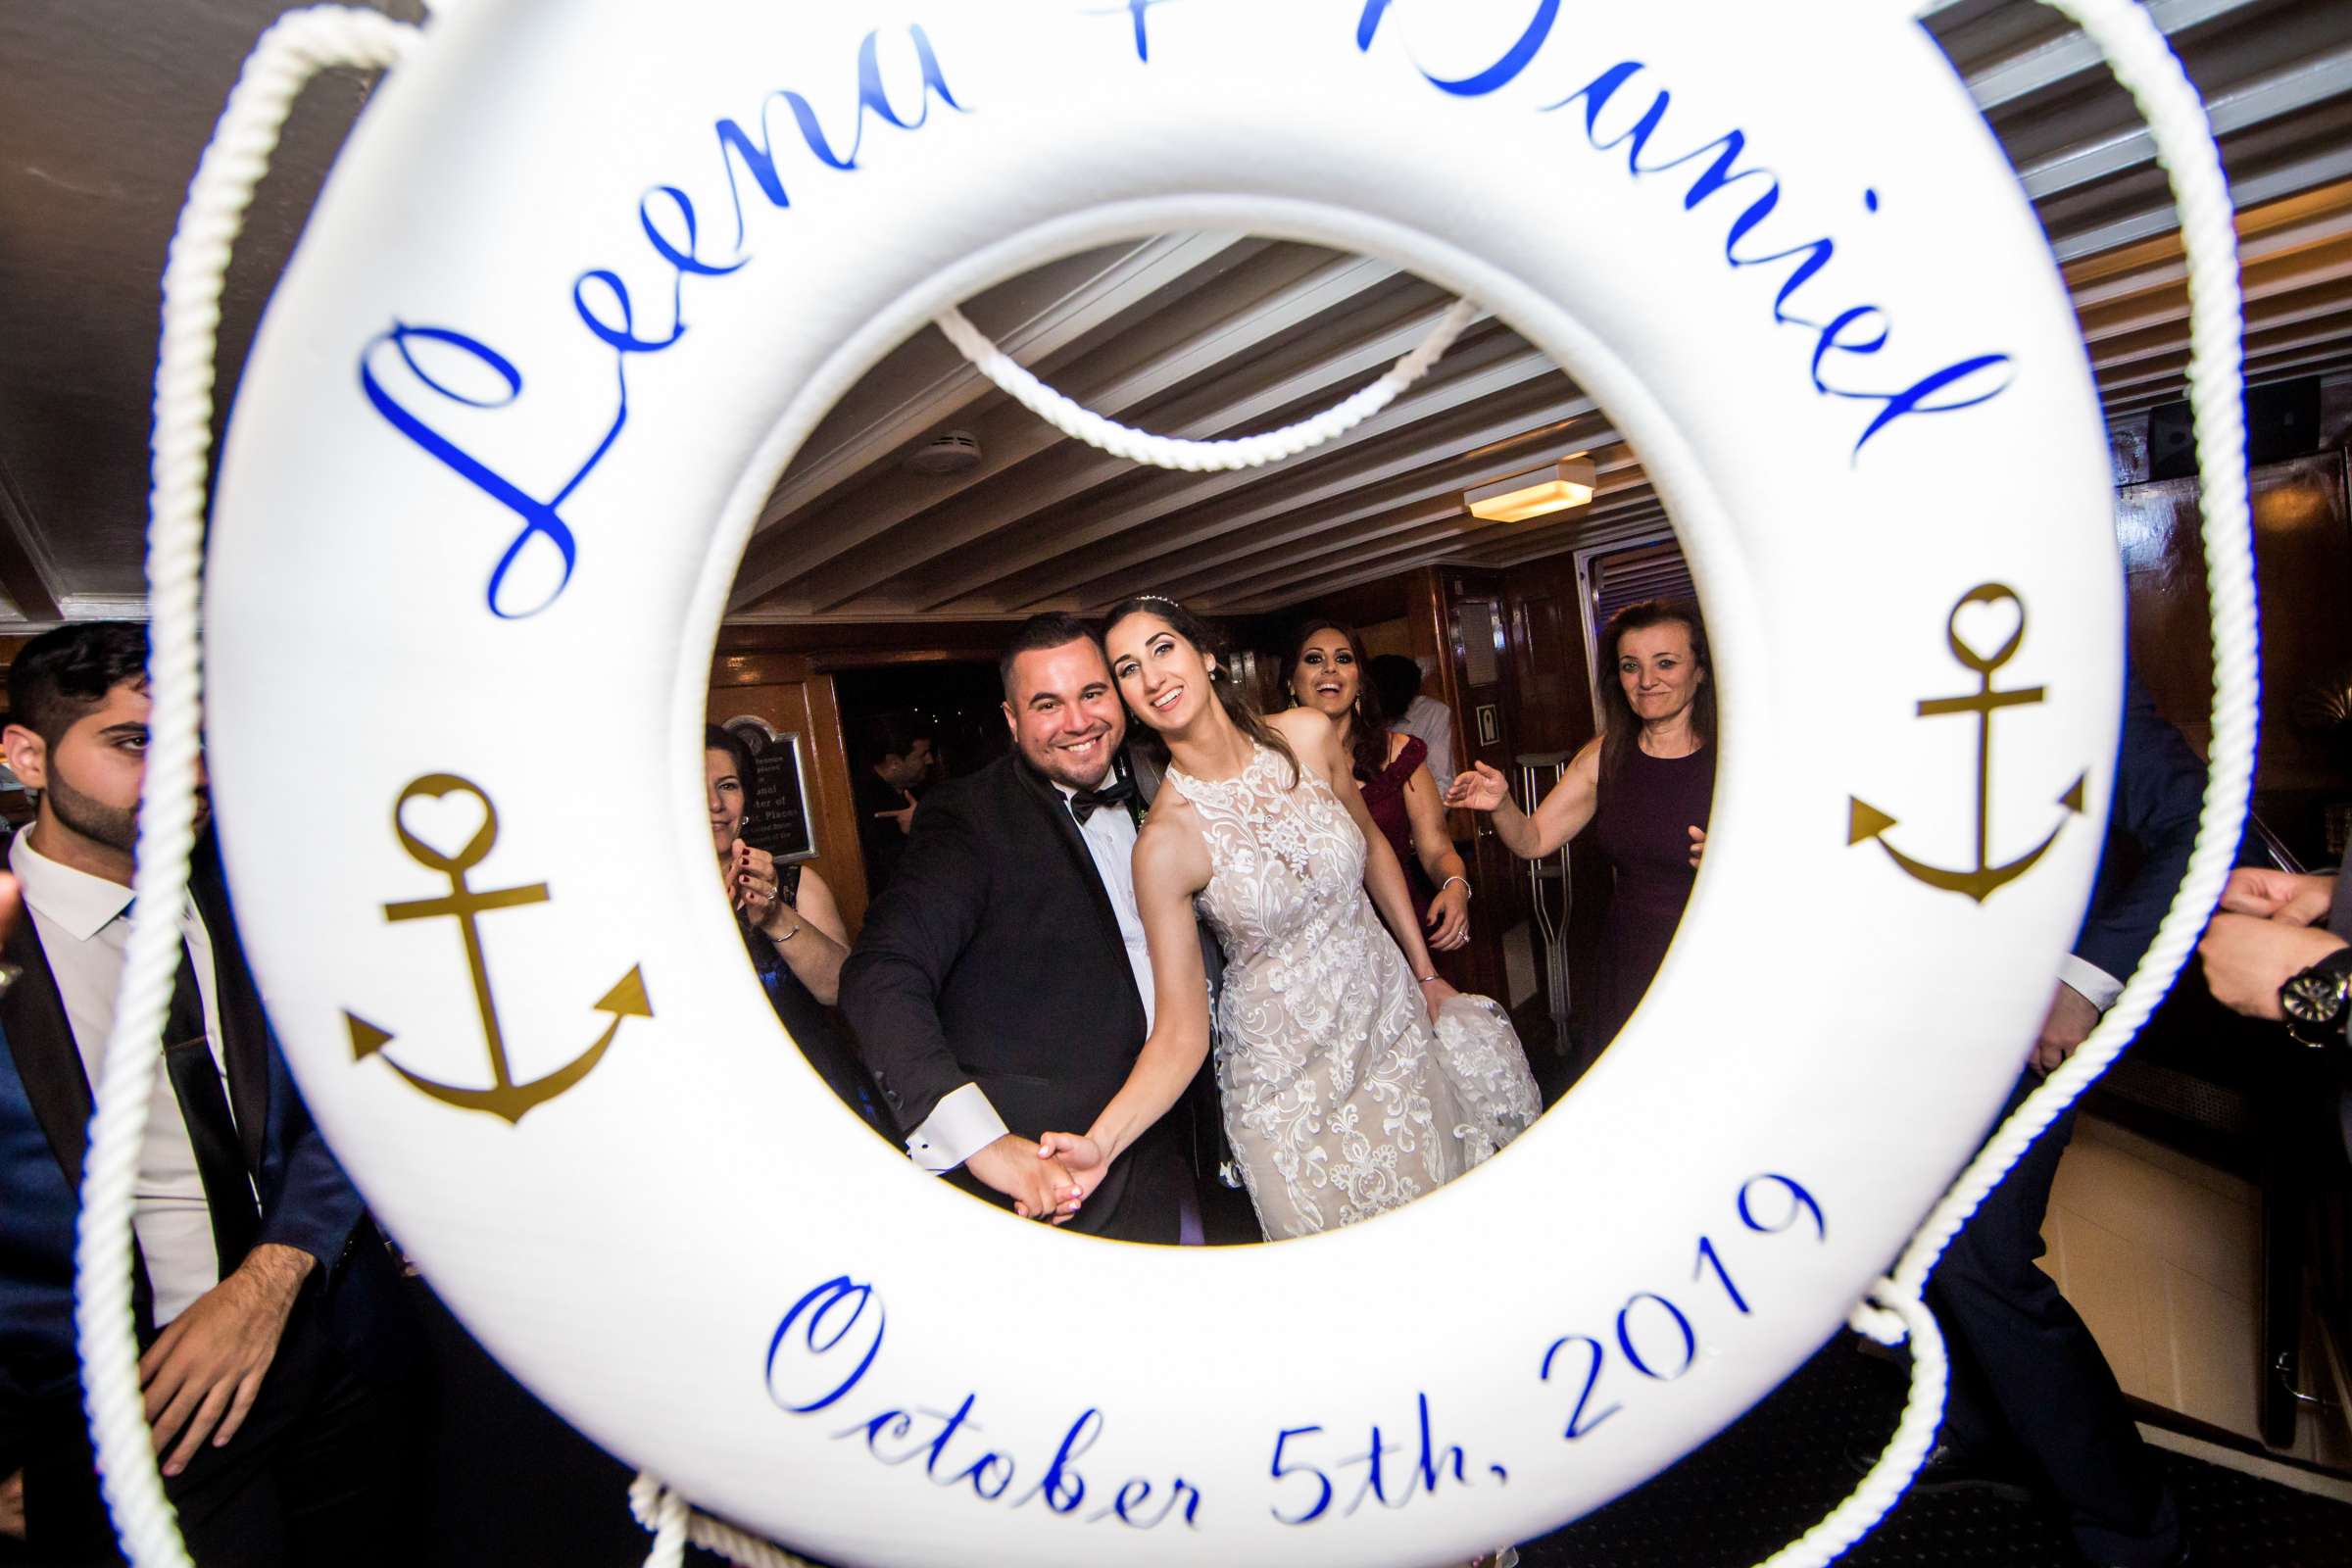 Hornblower cruise line Wedding, Leena and Daniel Wedding Photo #88 by True Photography